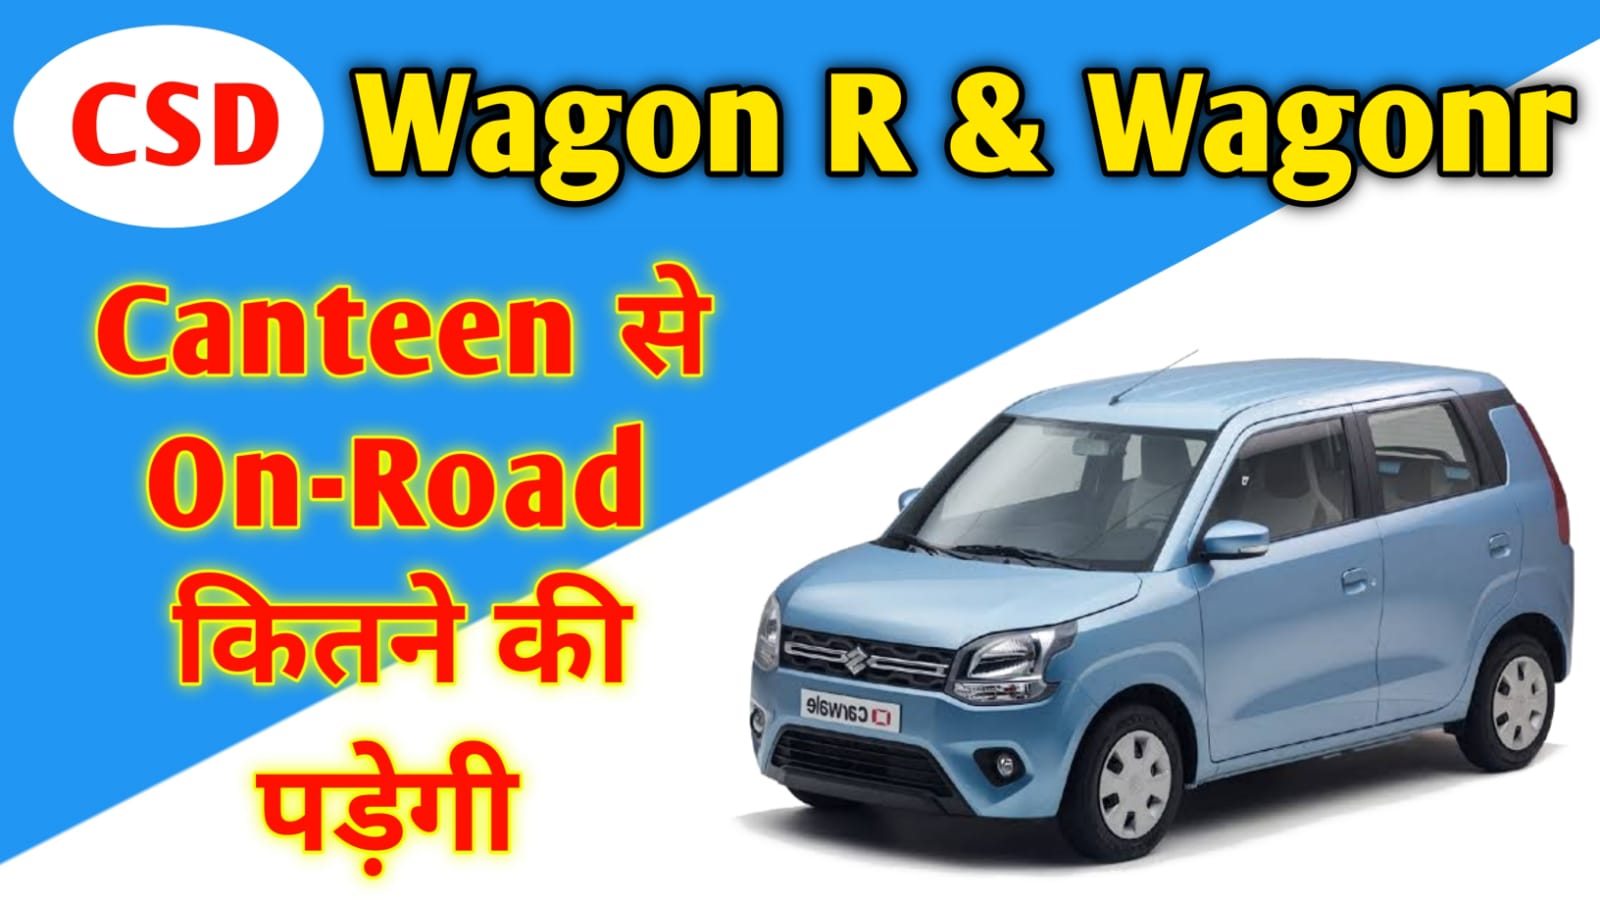 Maruti Suzuki WAGON R & WAGONR CSD Canteen Price List 2022 - AFD CSD Info